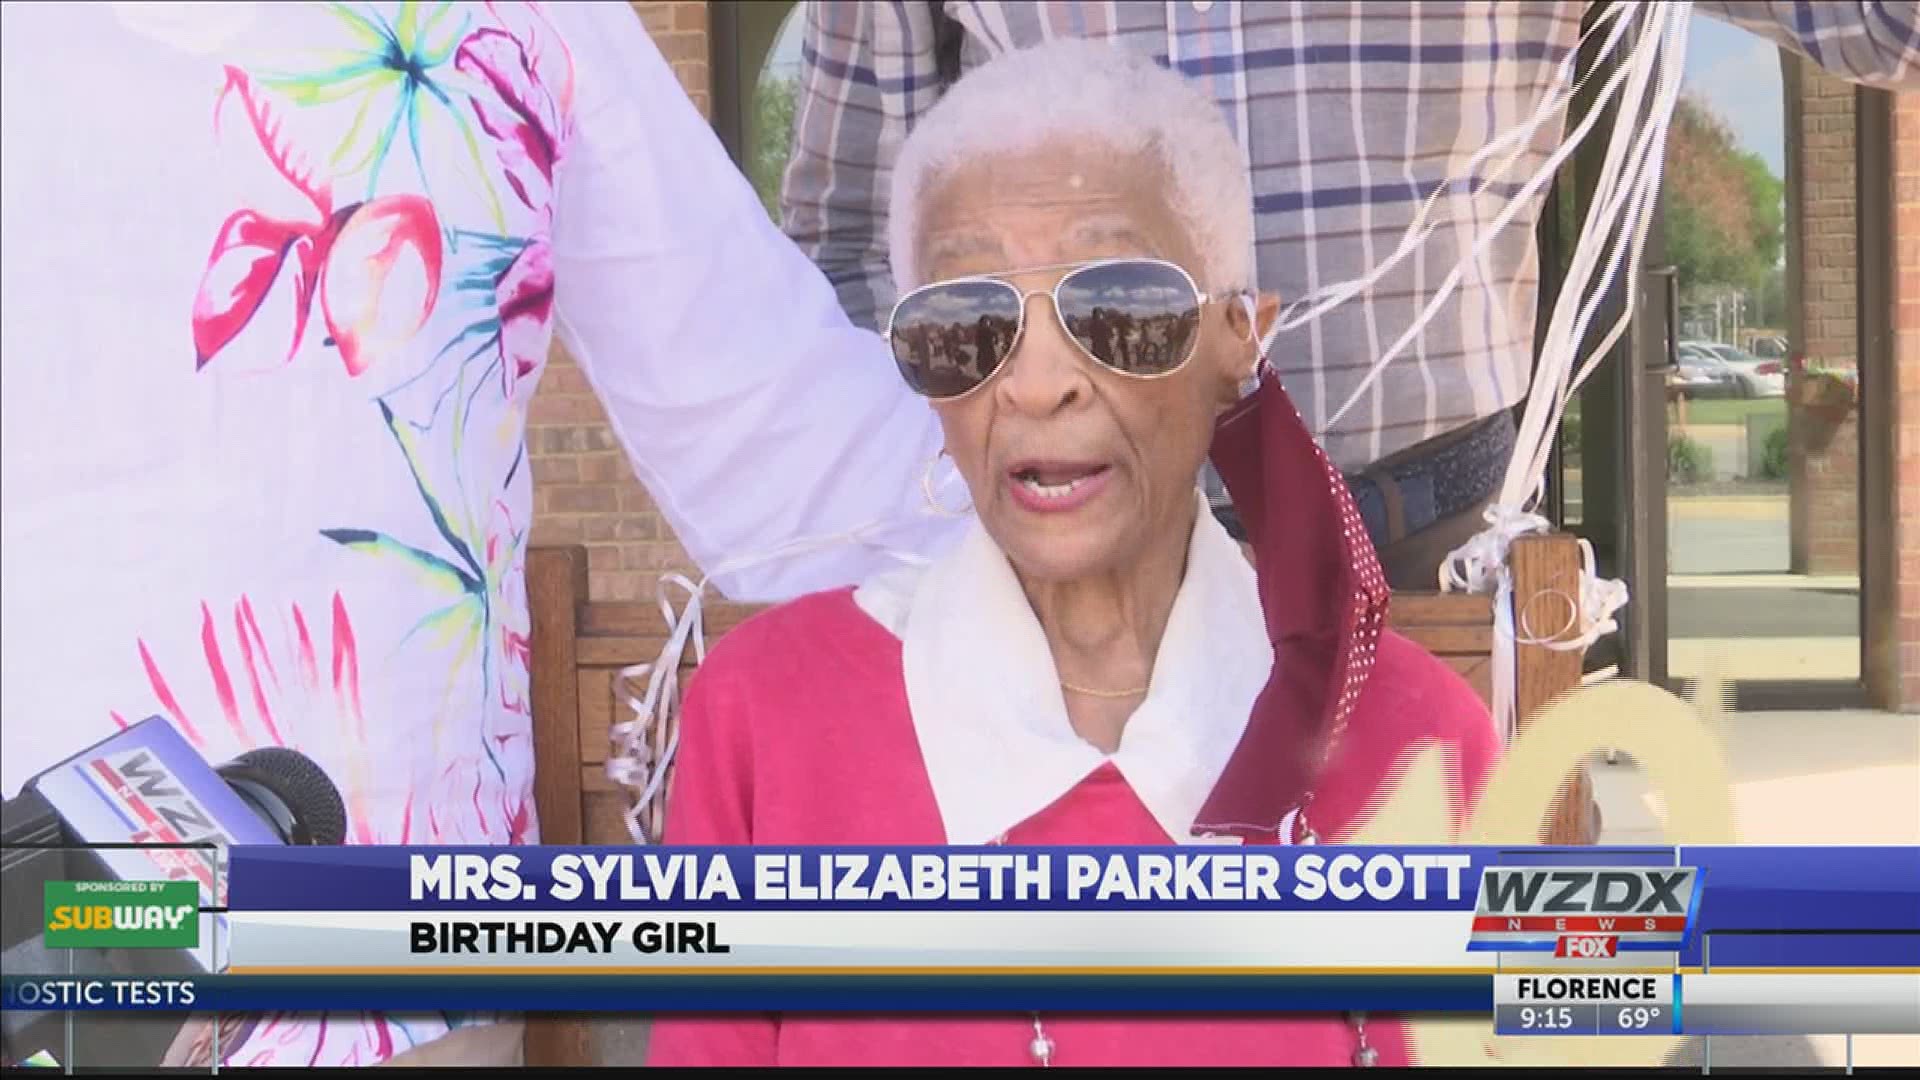 Mrs. Sylvia Elizabeth Parker Scott celebrated her birthday with Church Street Cumberland Presbyterian Church.